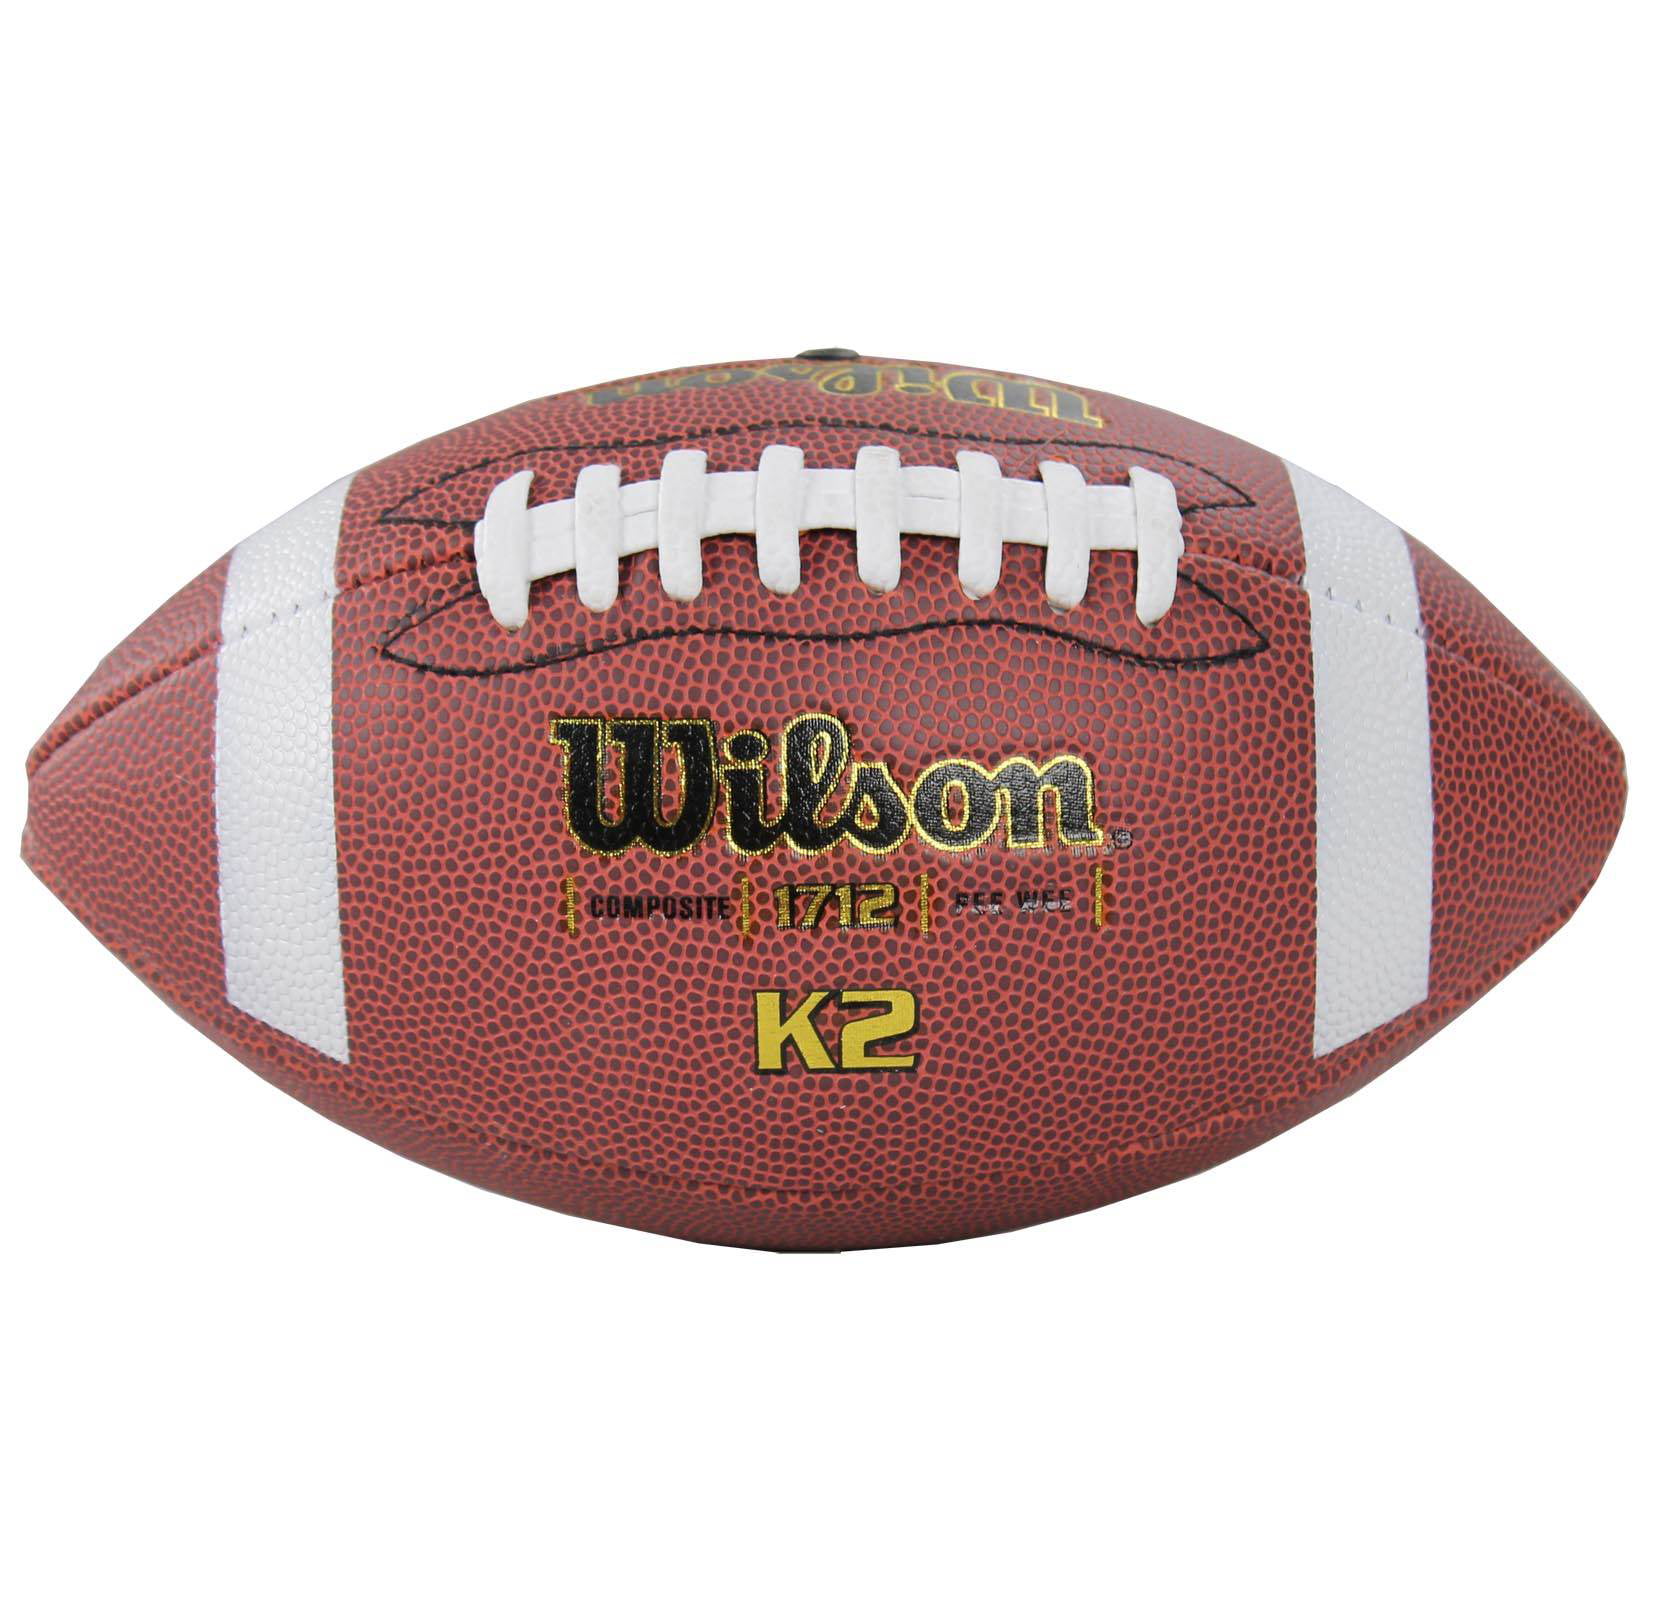 Minnesota Vikings Mini Size Composite Football